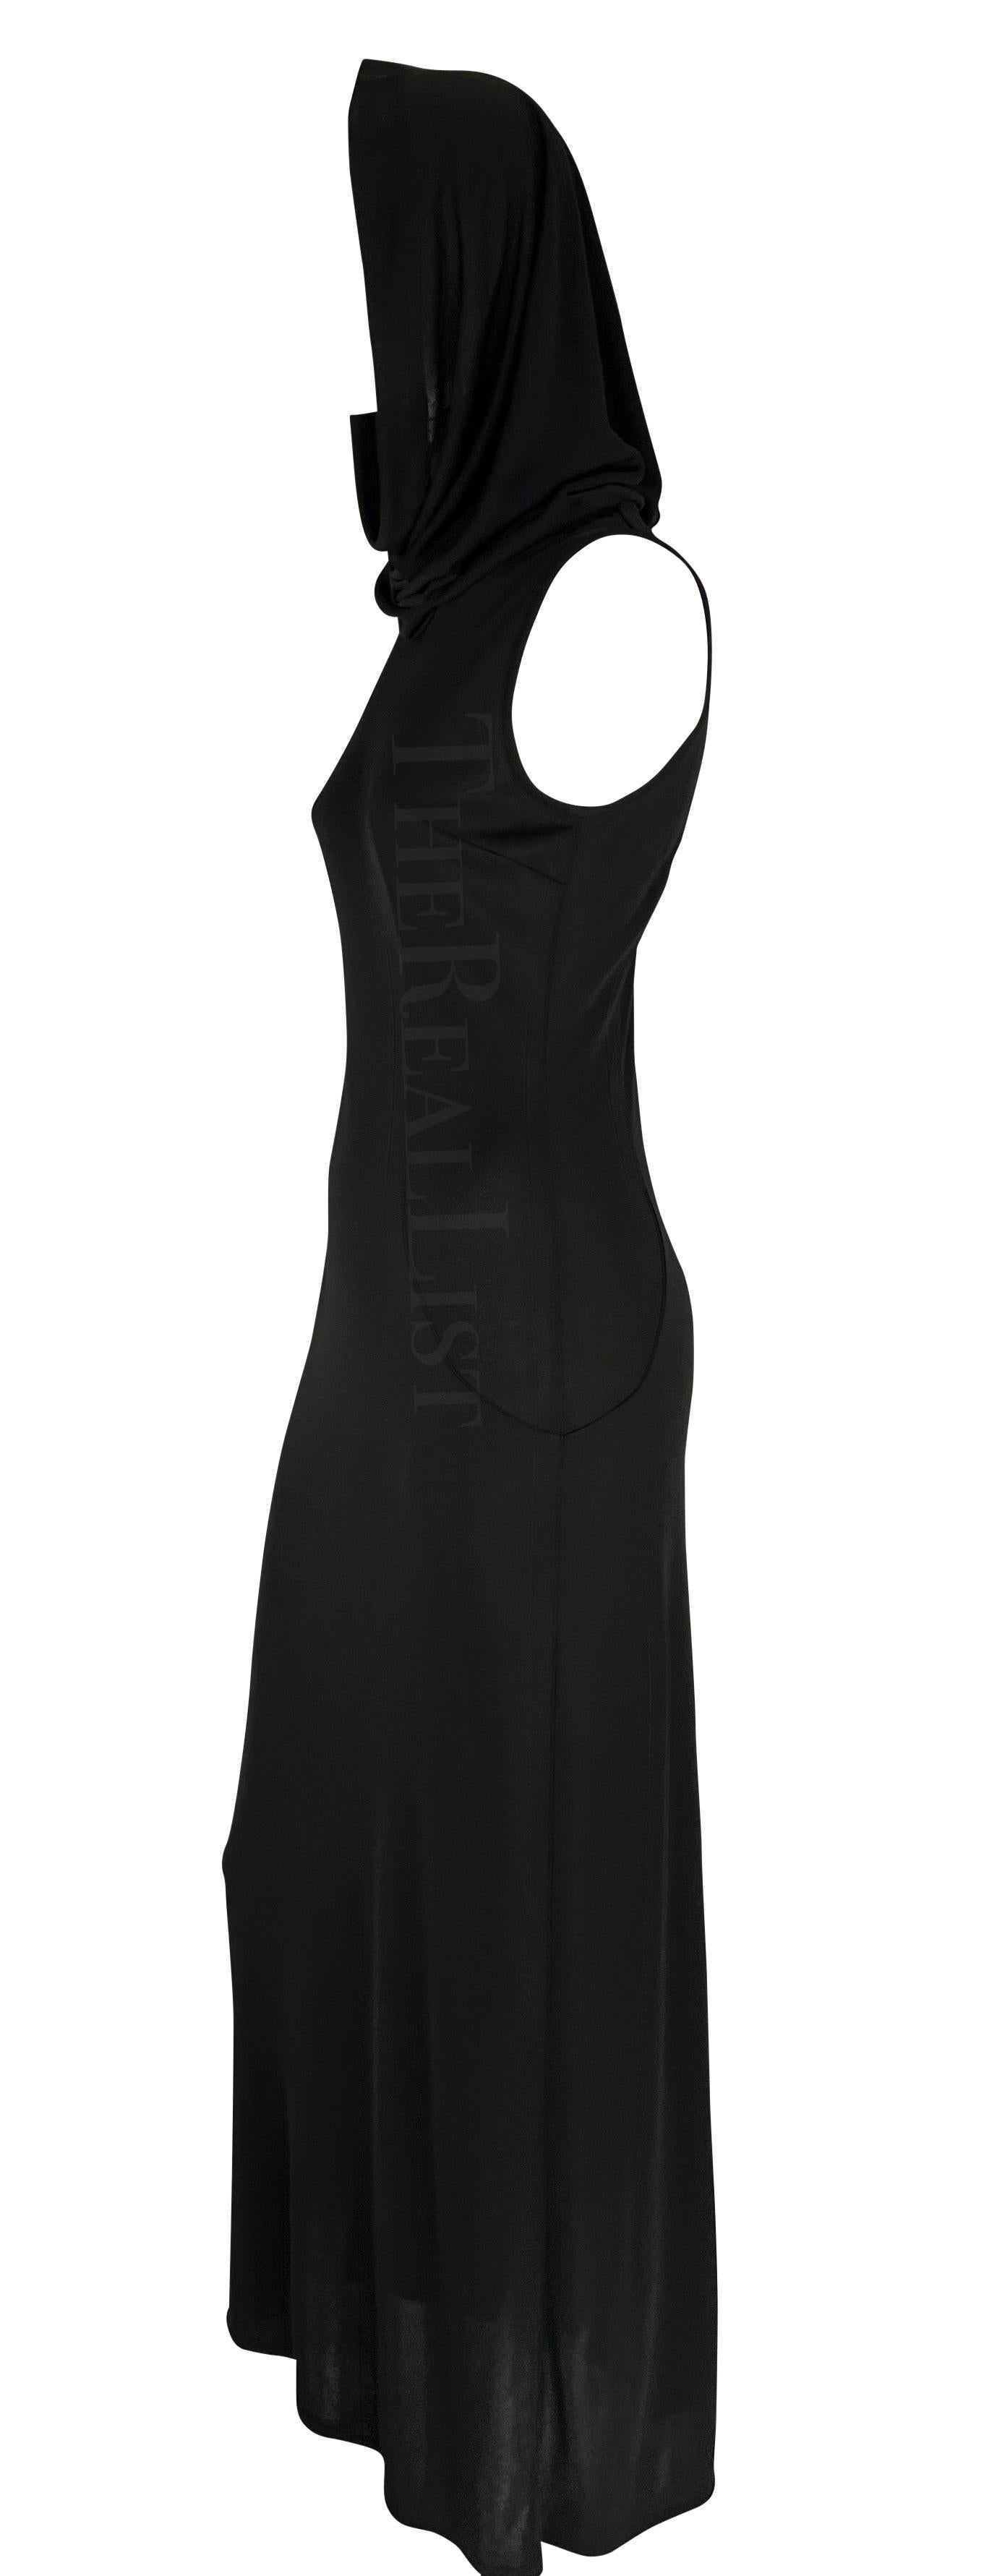 S/S 1996 Dolce & Gabbana Runway Hooded Stretch Black High Slit Dress For Sale 1